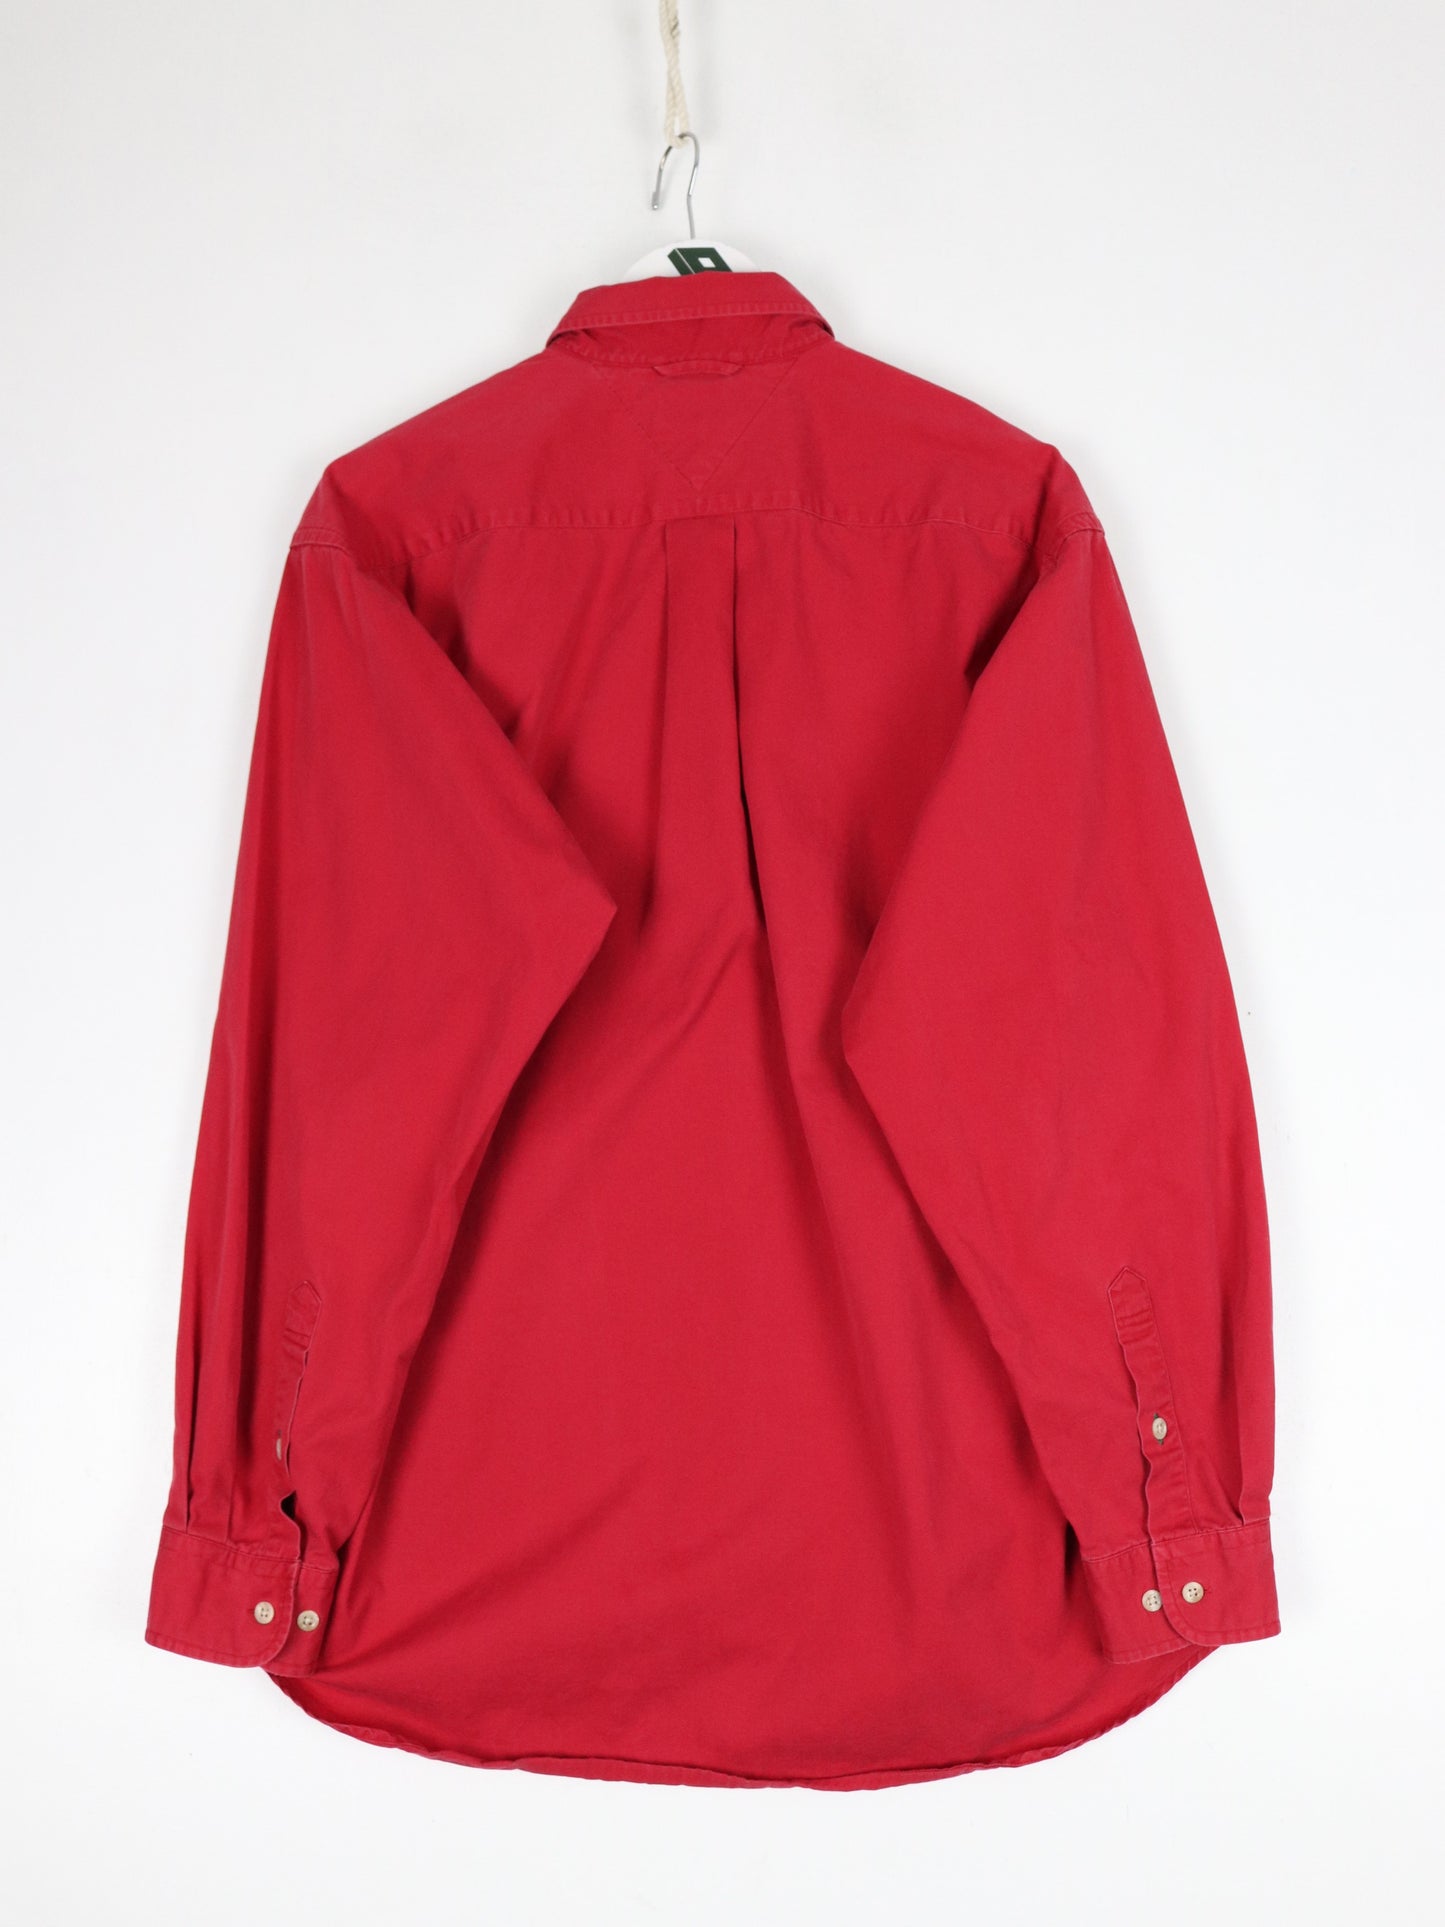 Vintage Tommy Hilfiger Shirt Mens Medium Red Button Up 90s